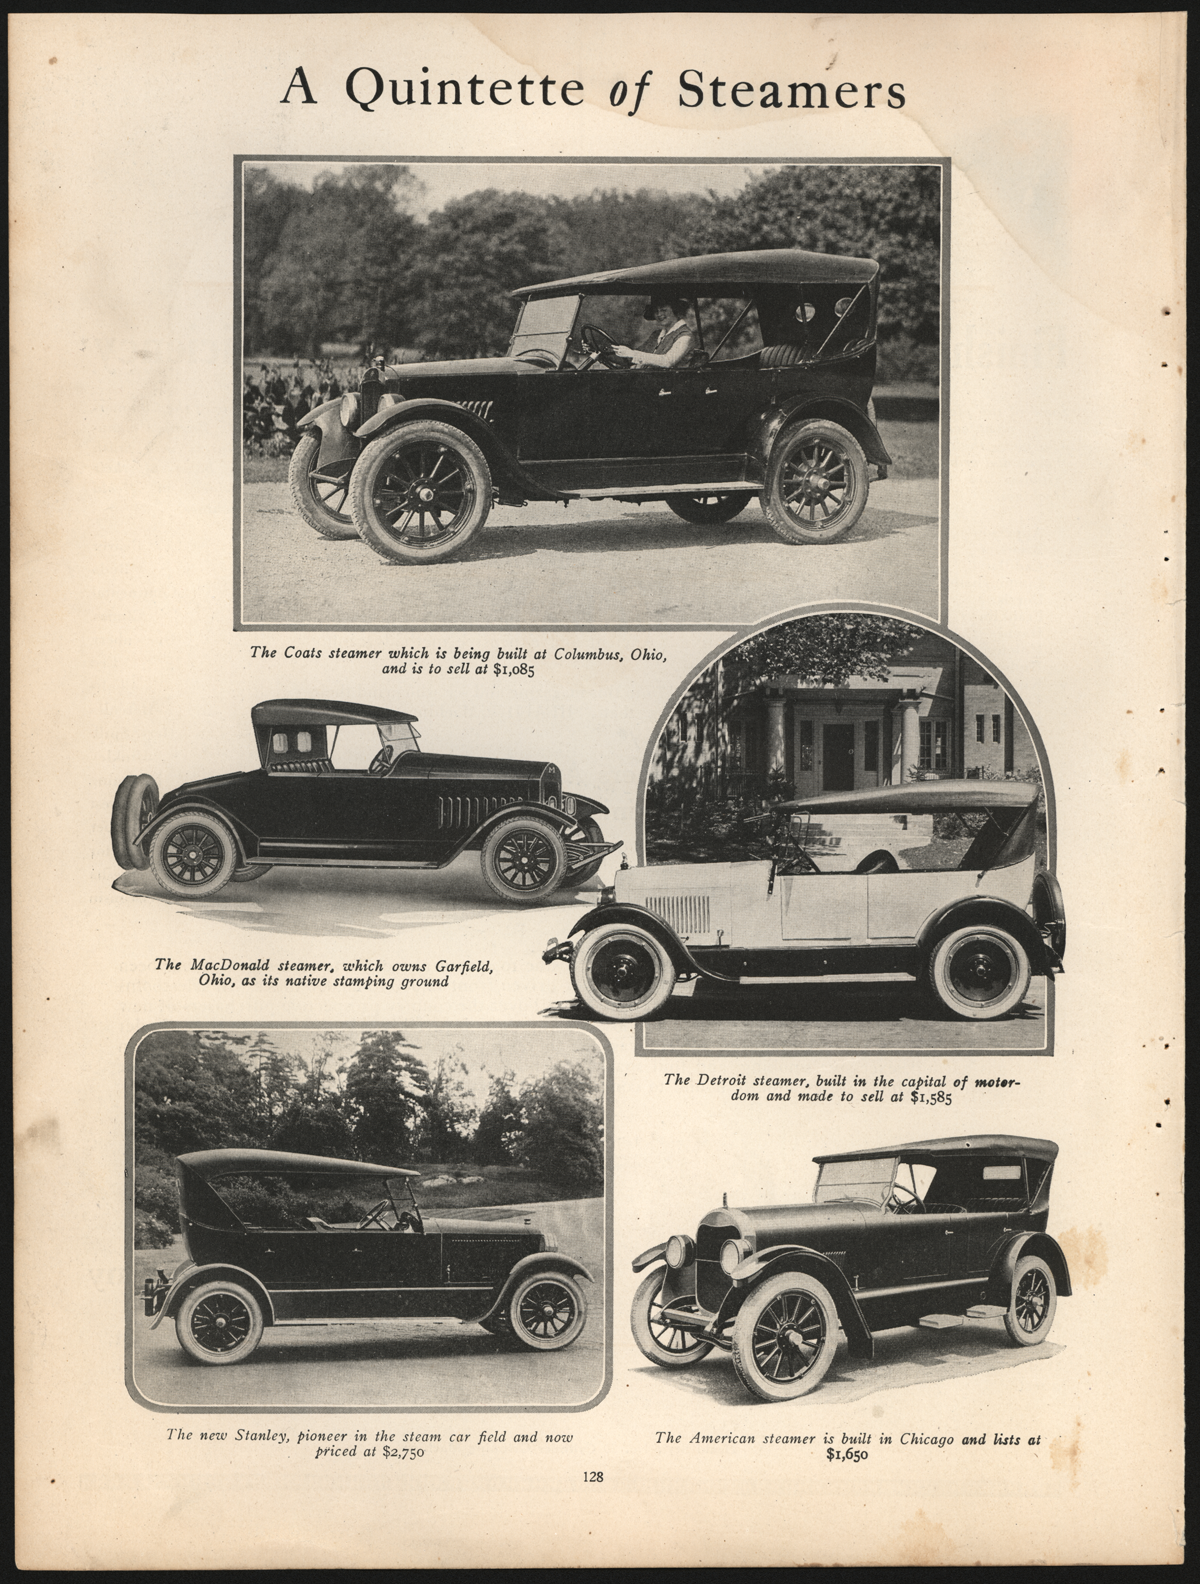 American Steam Truck Company, Passenger Car Department, American Steamer, January 1923, Motor Magazine, p. 128